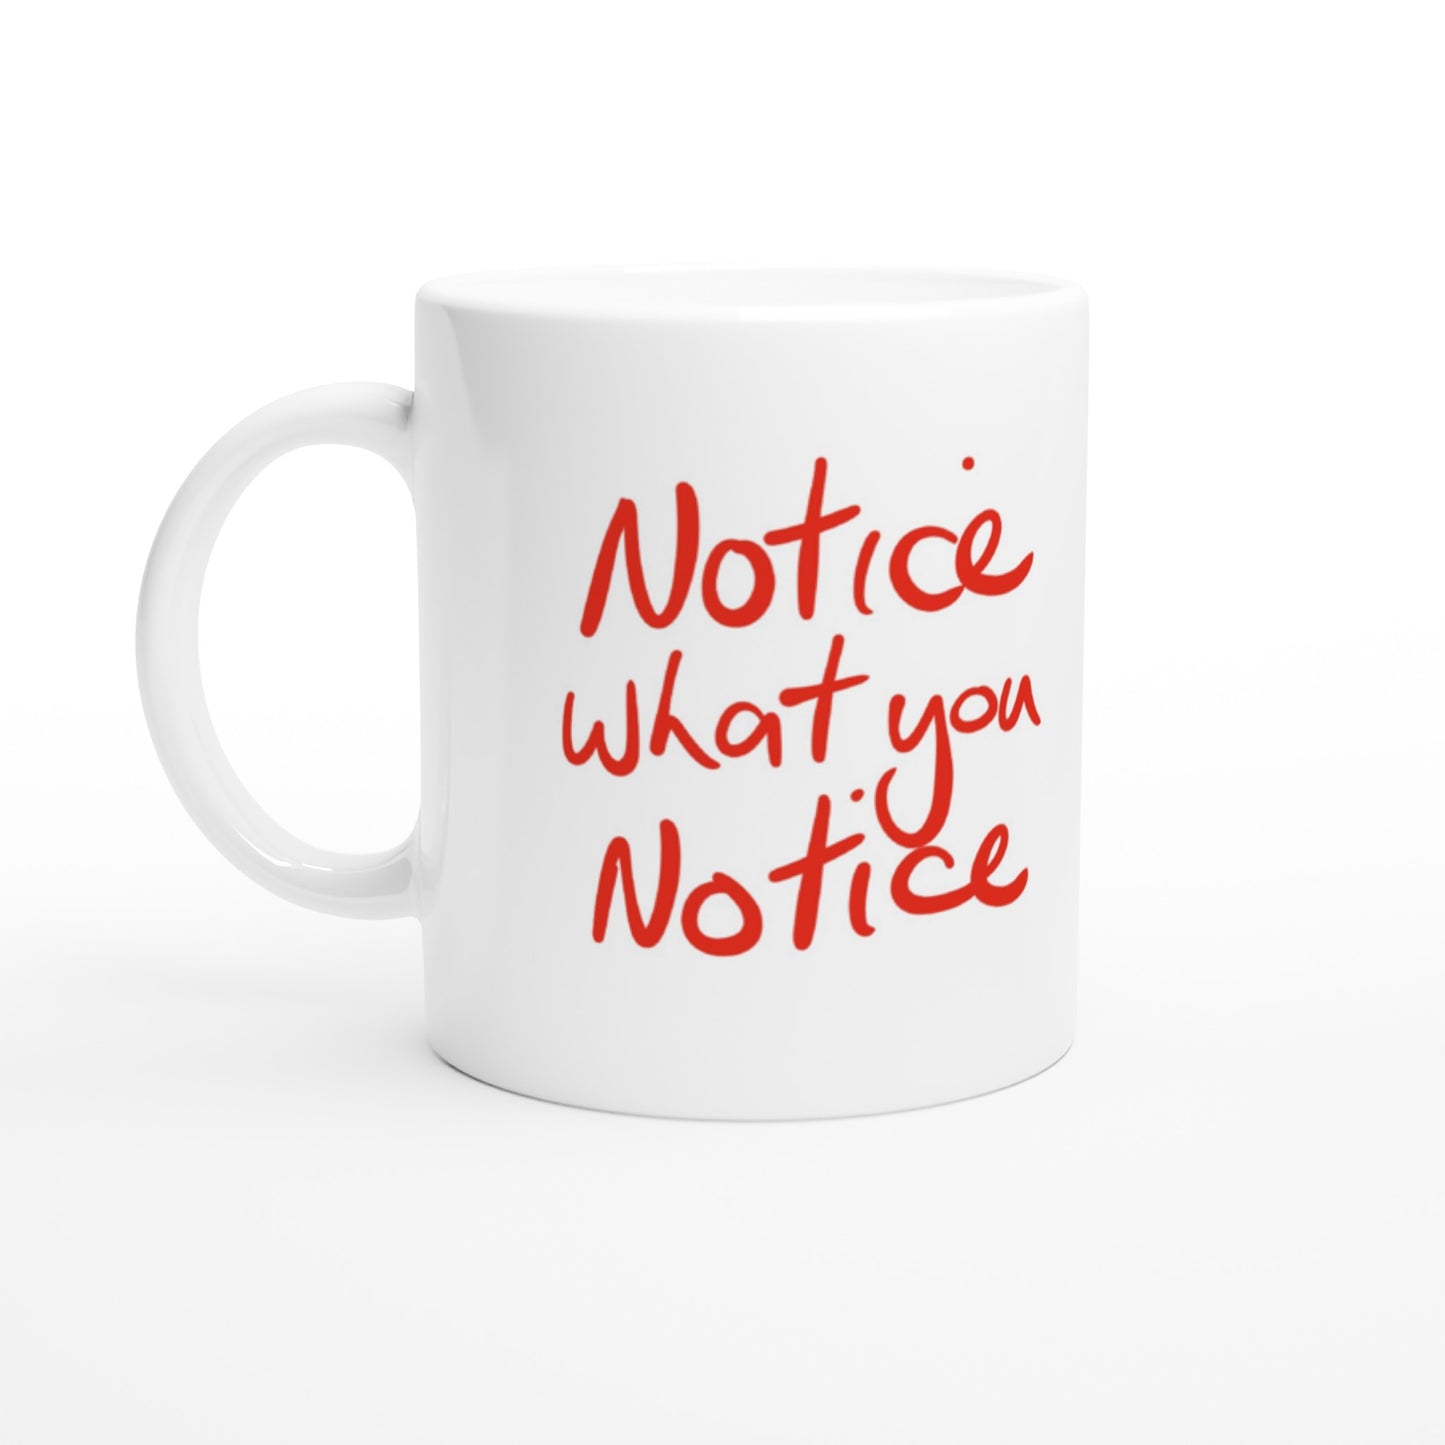 'Notice what you notice' Red on White 11oz Ceramic Mug. Free Shipping.